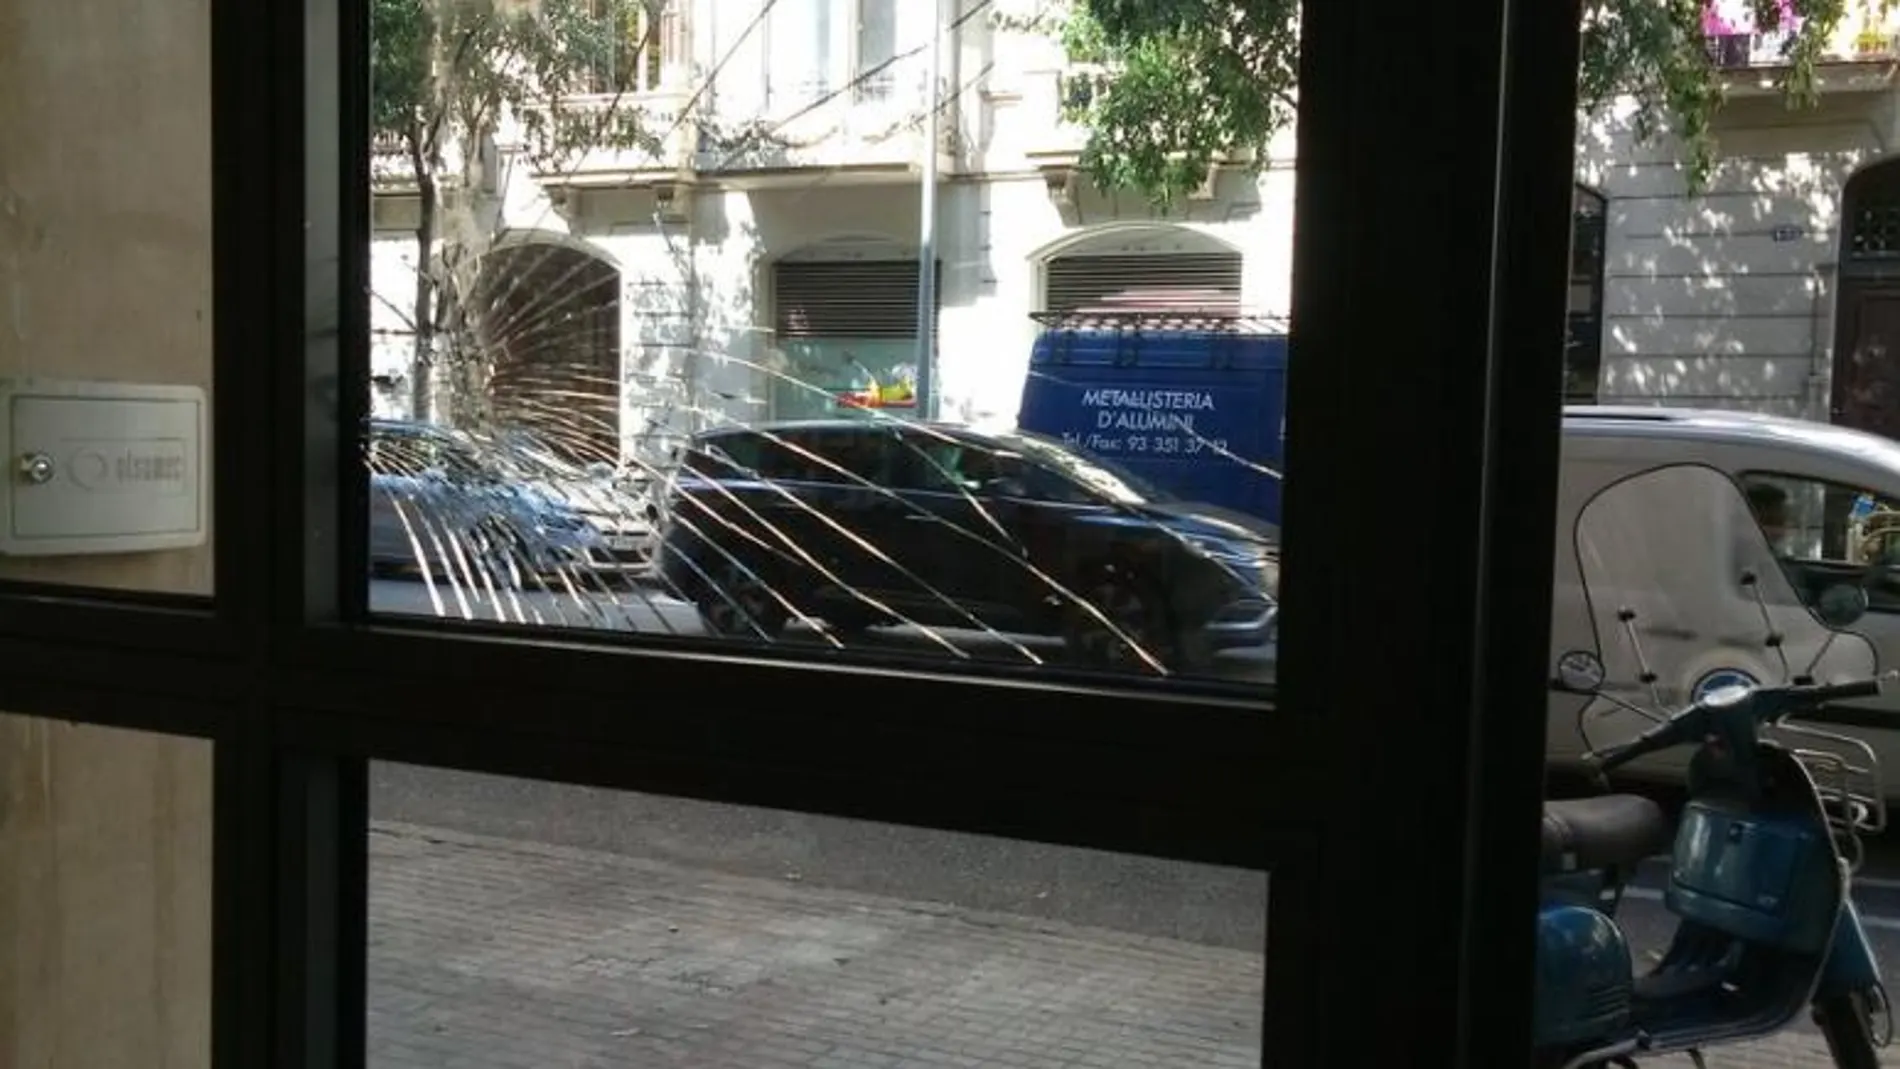 El PSC de Barcelona ha publicado una imagen del cristal de la puerta roto